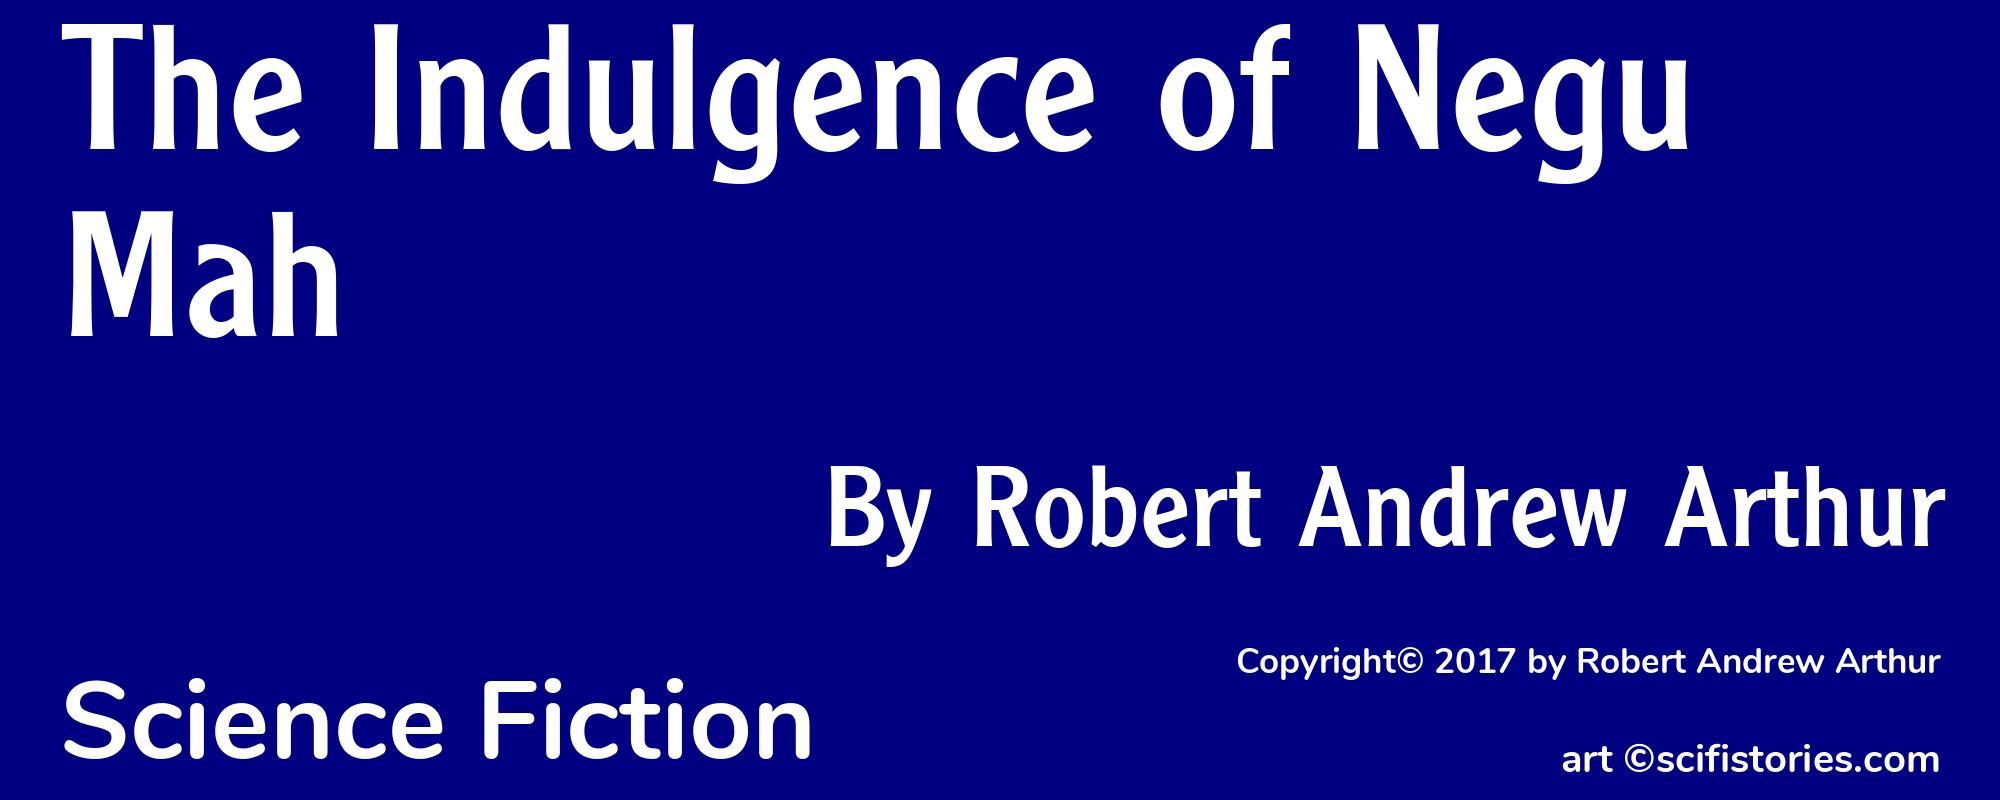 The Indulgence of Negu Mah - Cover